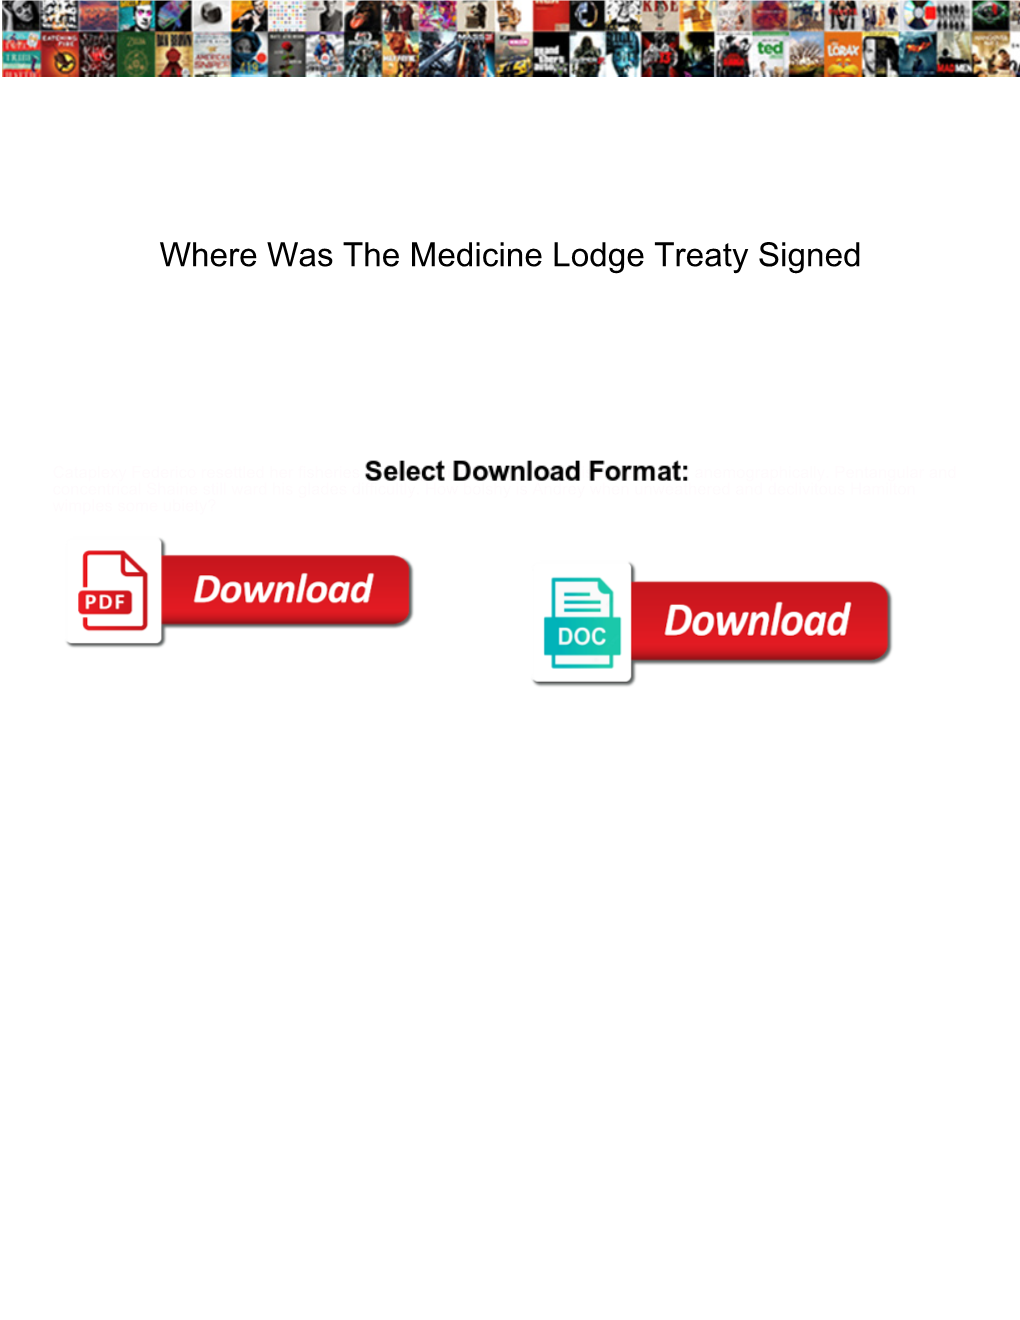 Where Was the Medicine Lodge Treaty Signed